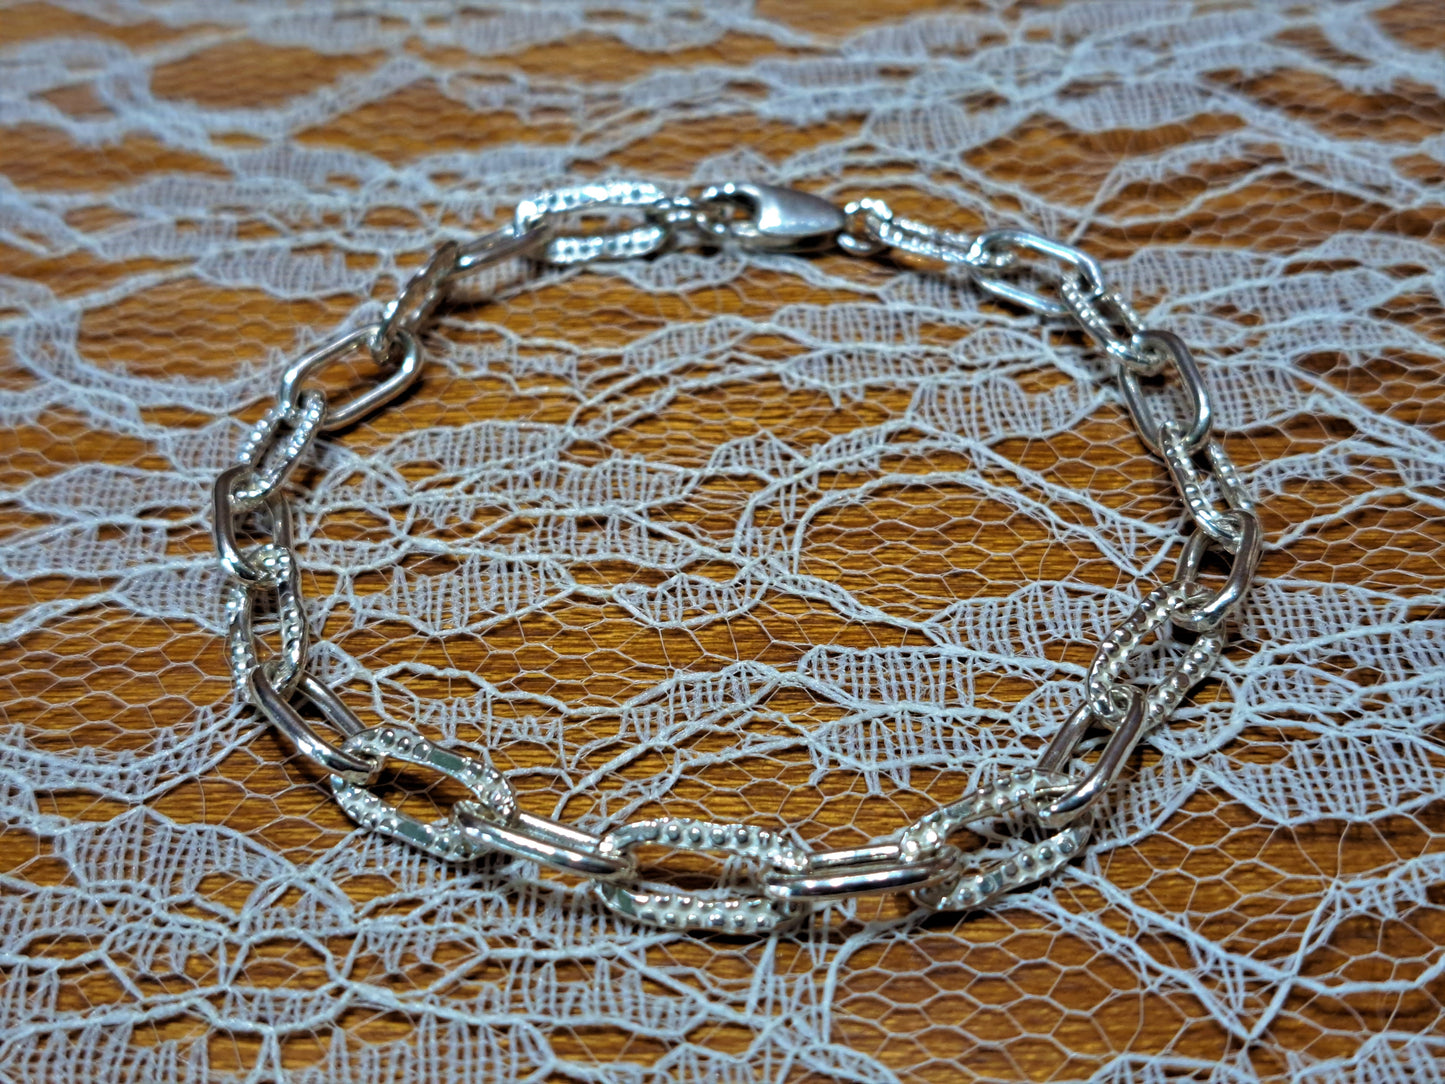 Sterling silver bracelet- chain